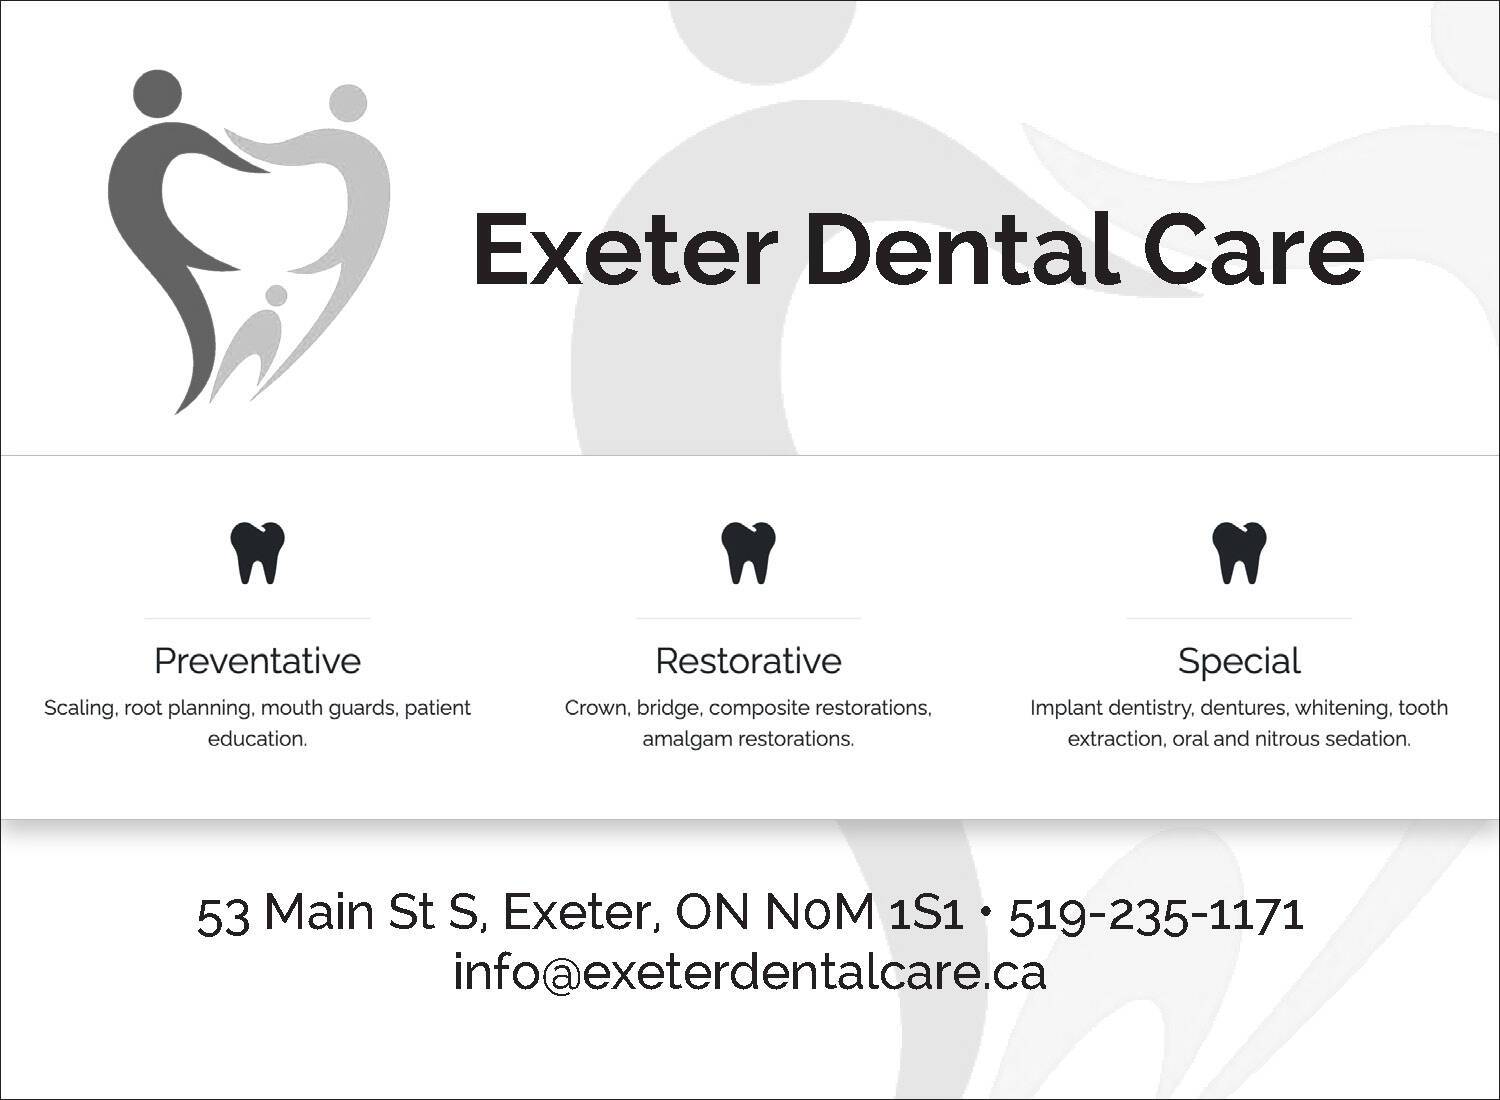 Exeter Dental Care